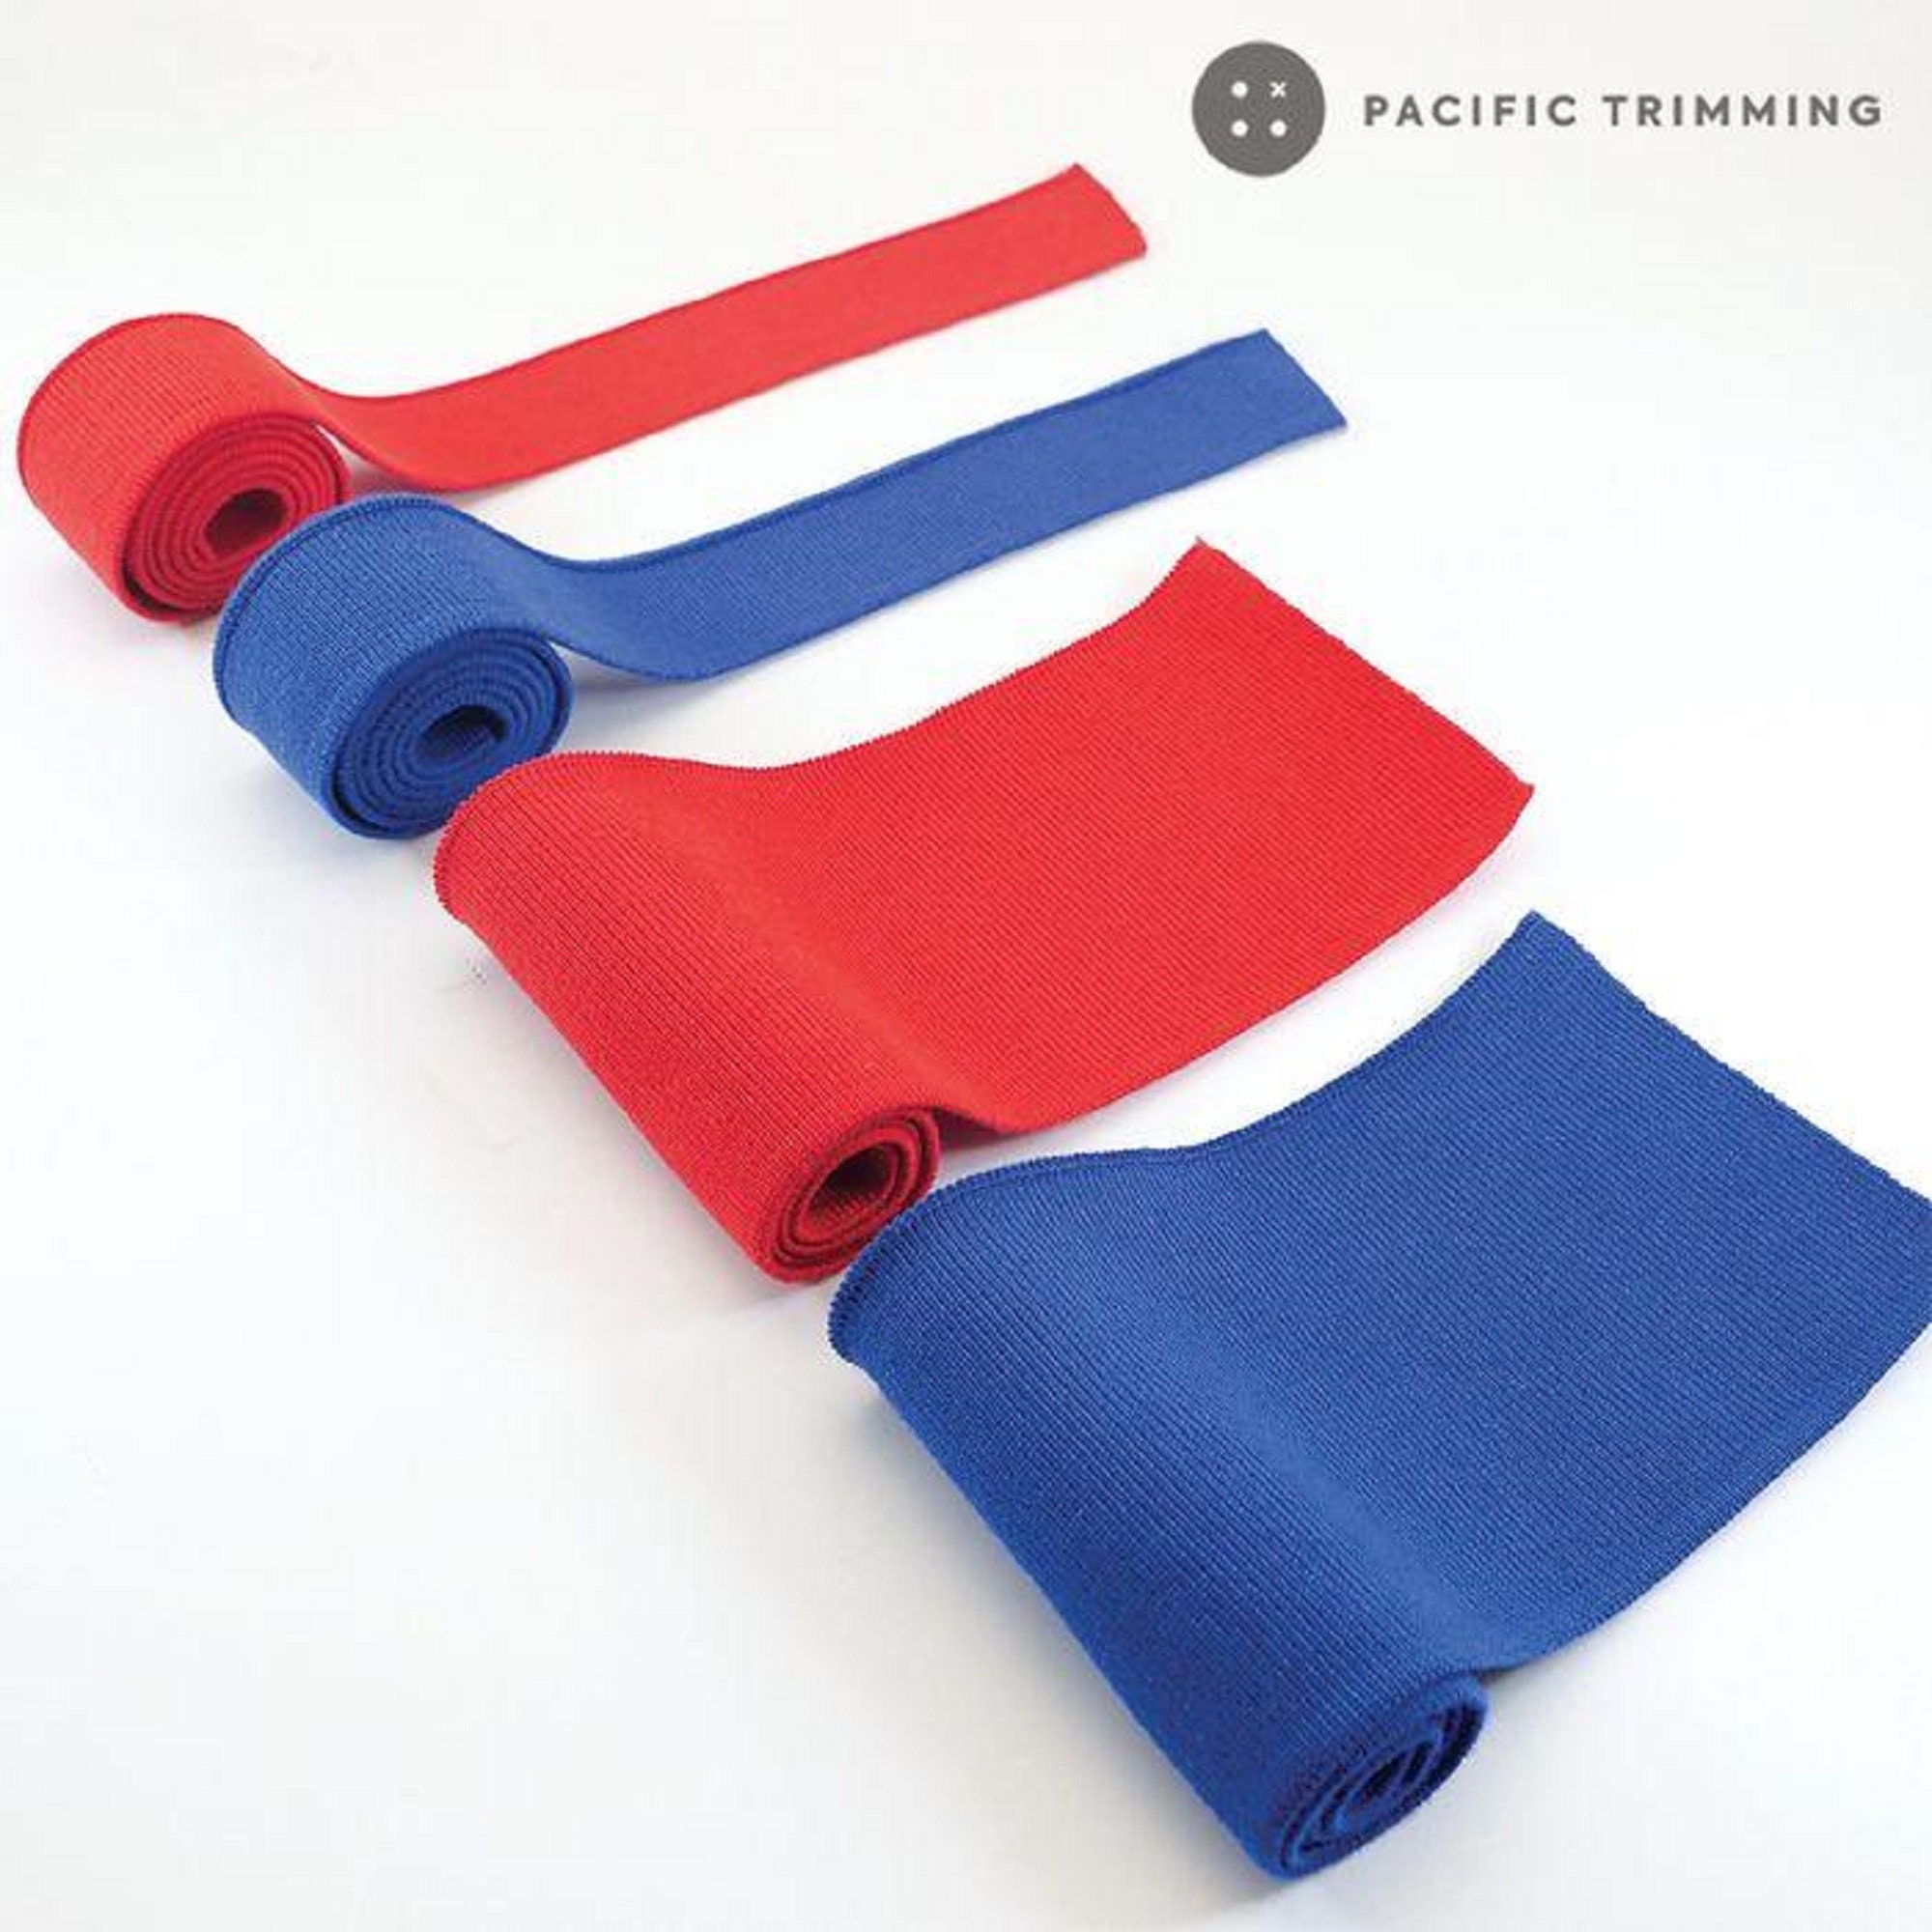 38 Colors Choose Ribbing 7.8 Length 20 X 120cm Ribbing and Binding Knit  Fabric for Neckline, Cuffs, Hems 